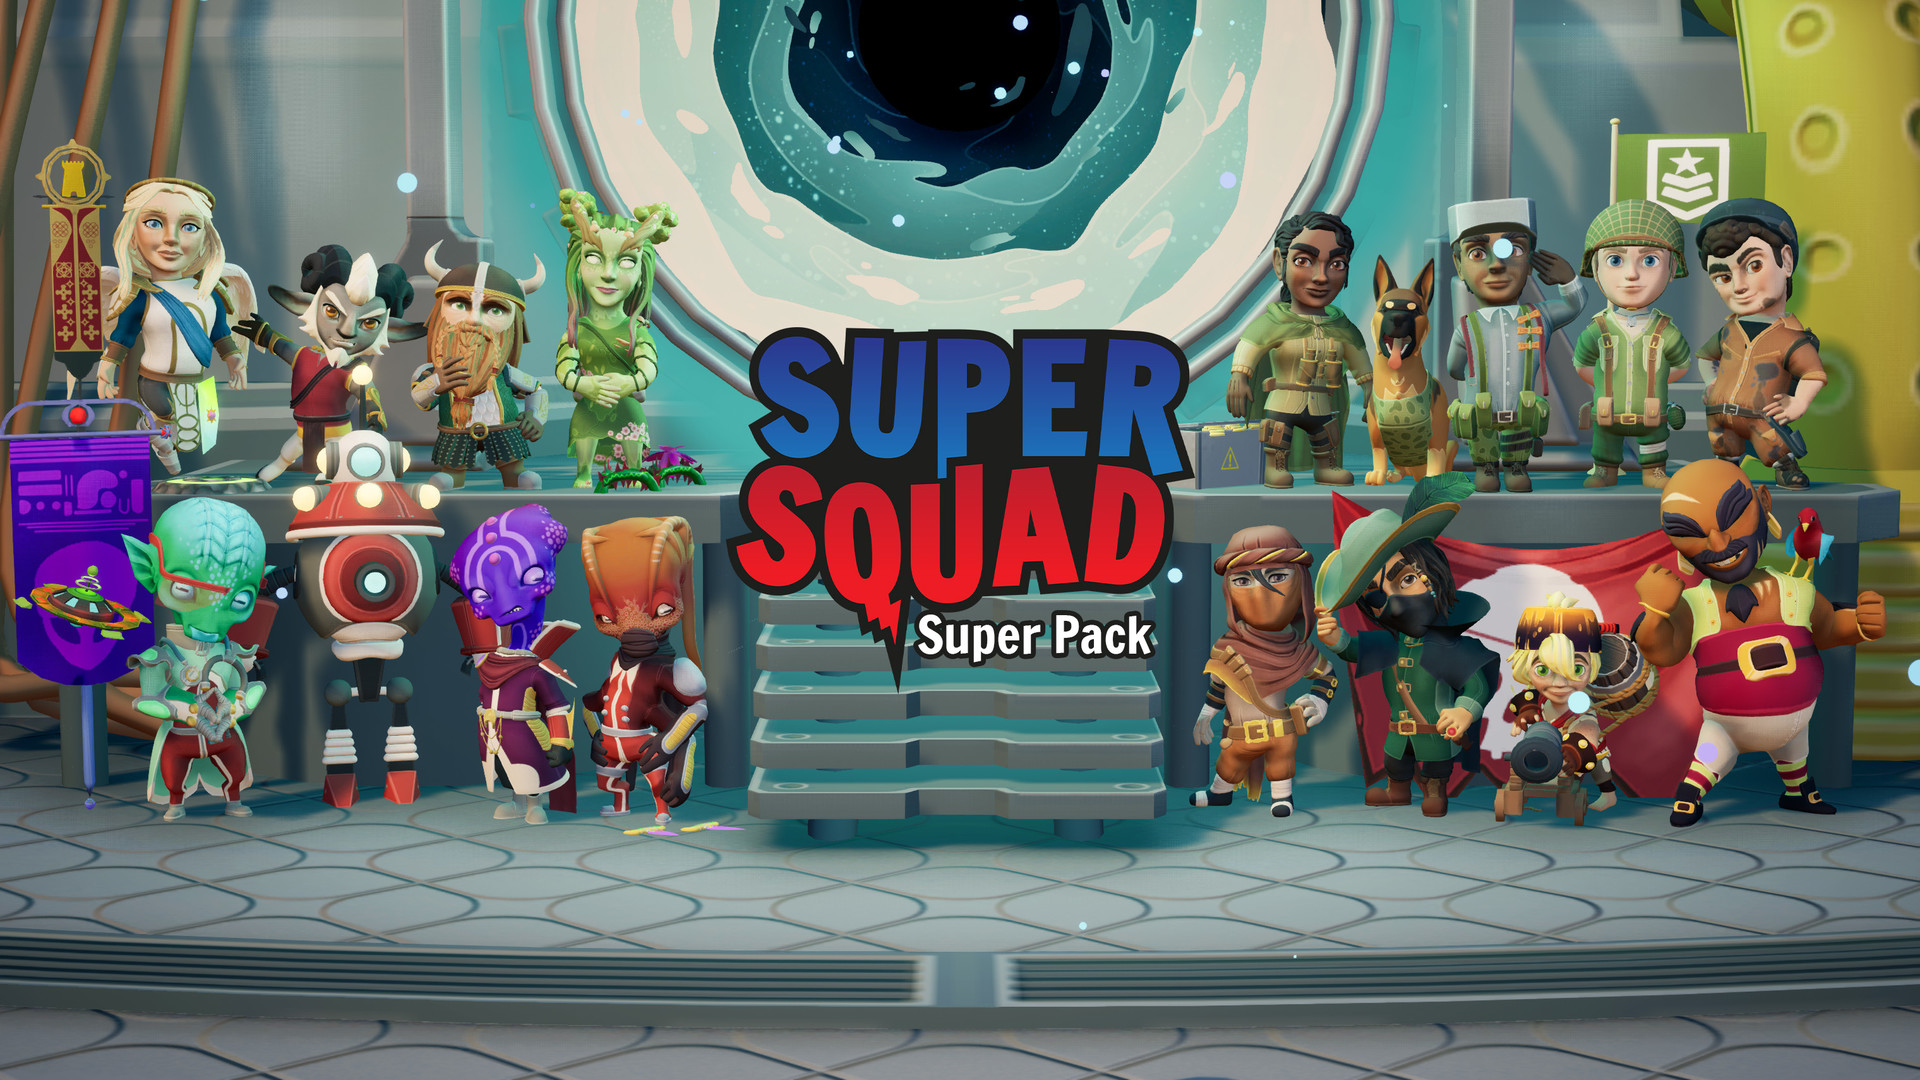 Super Squad - Super Pack DLC Steam CD Key 22.59 USD